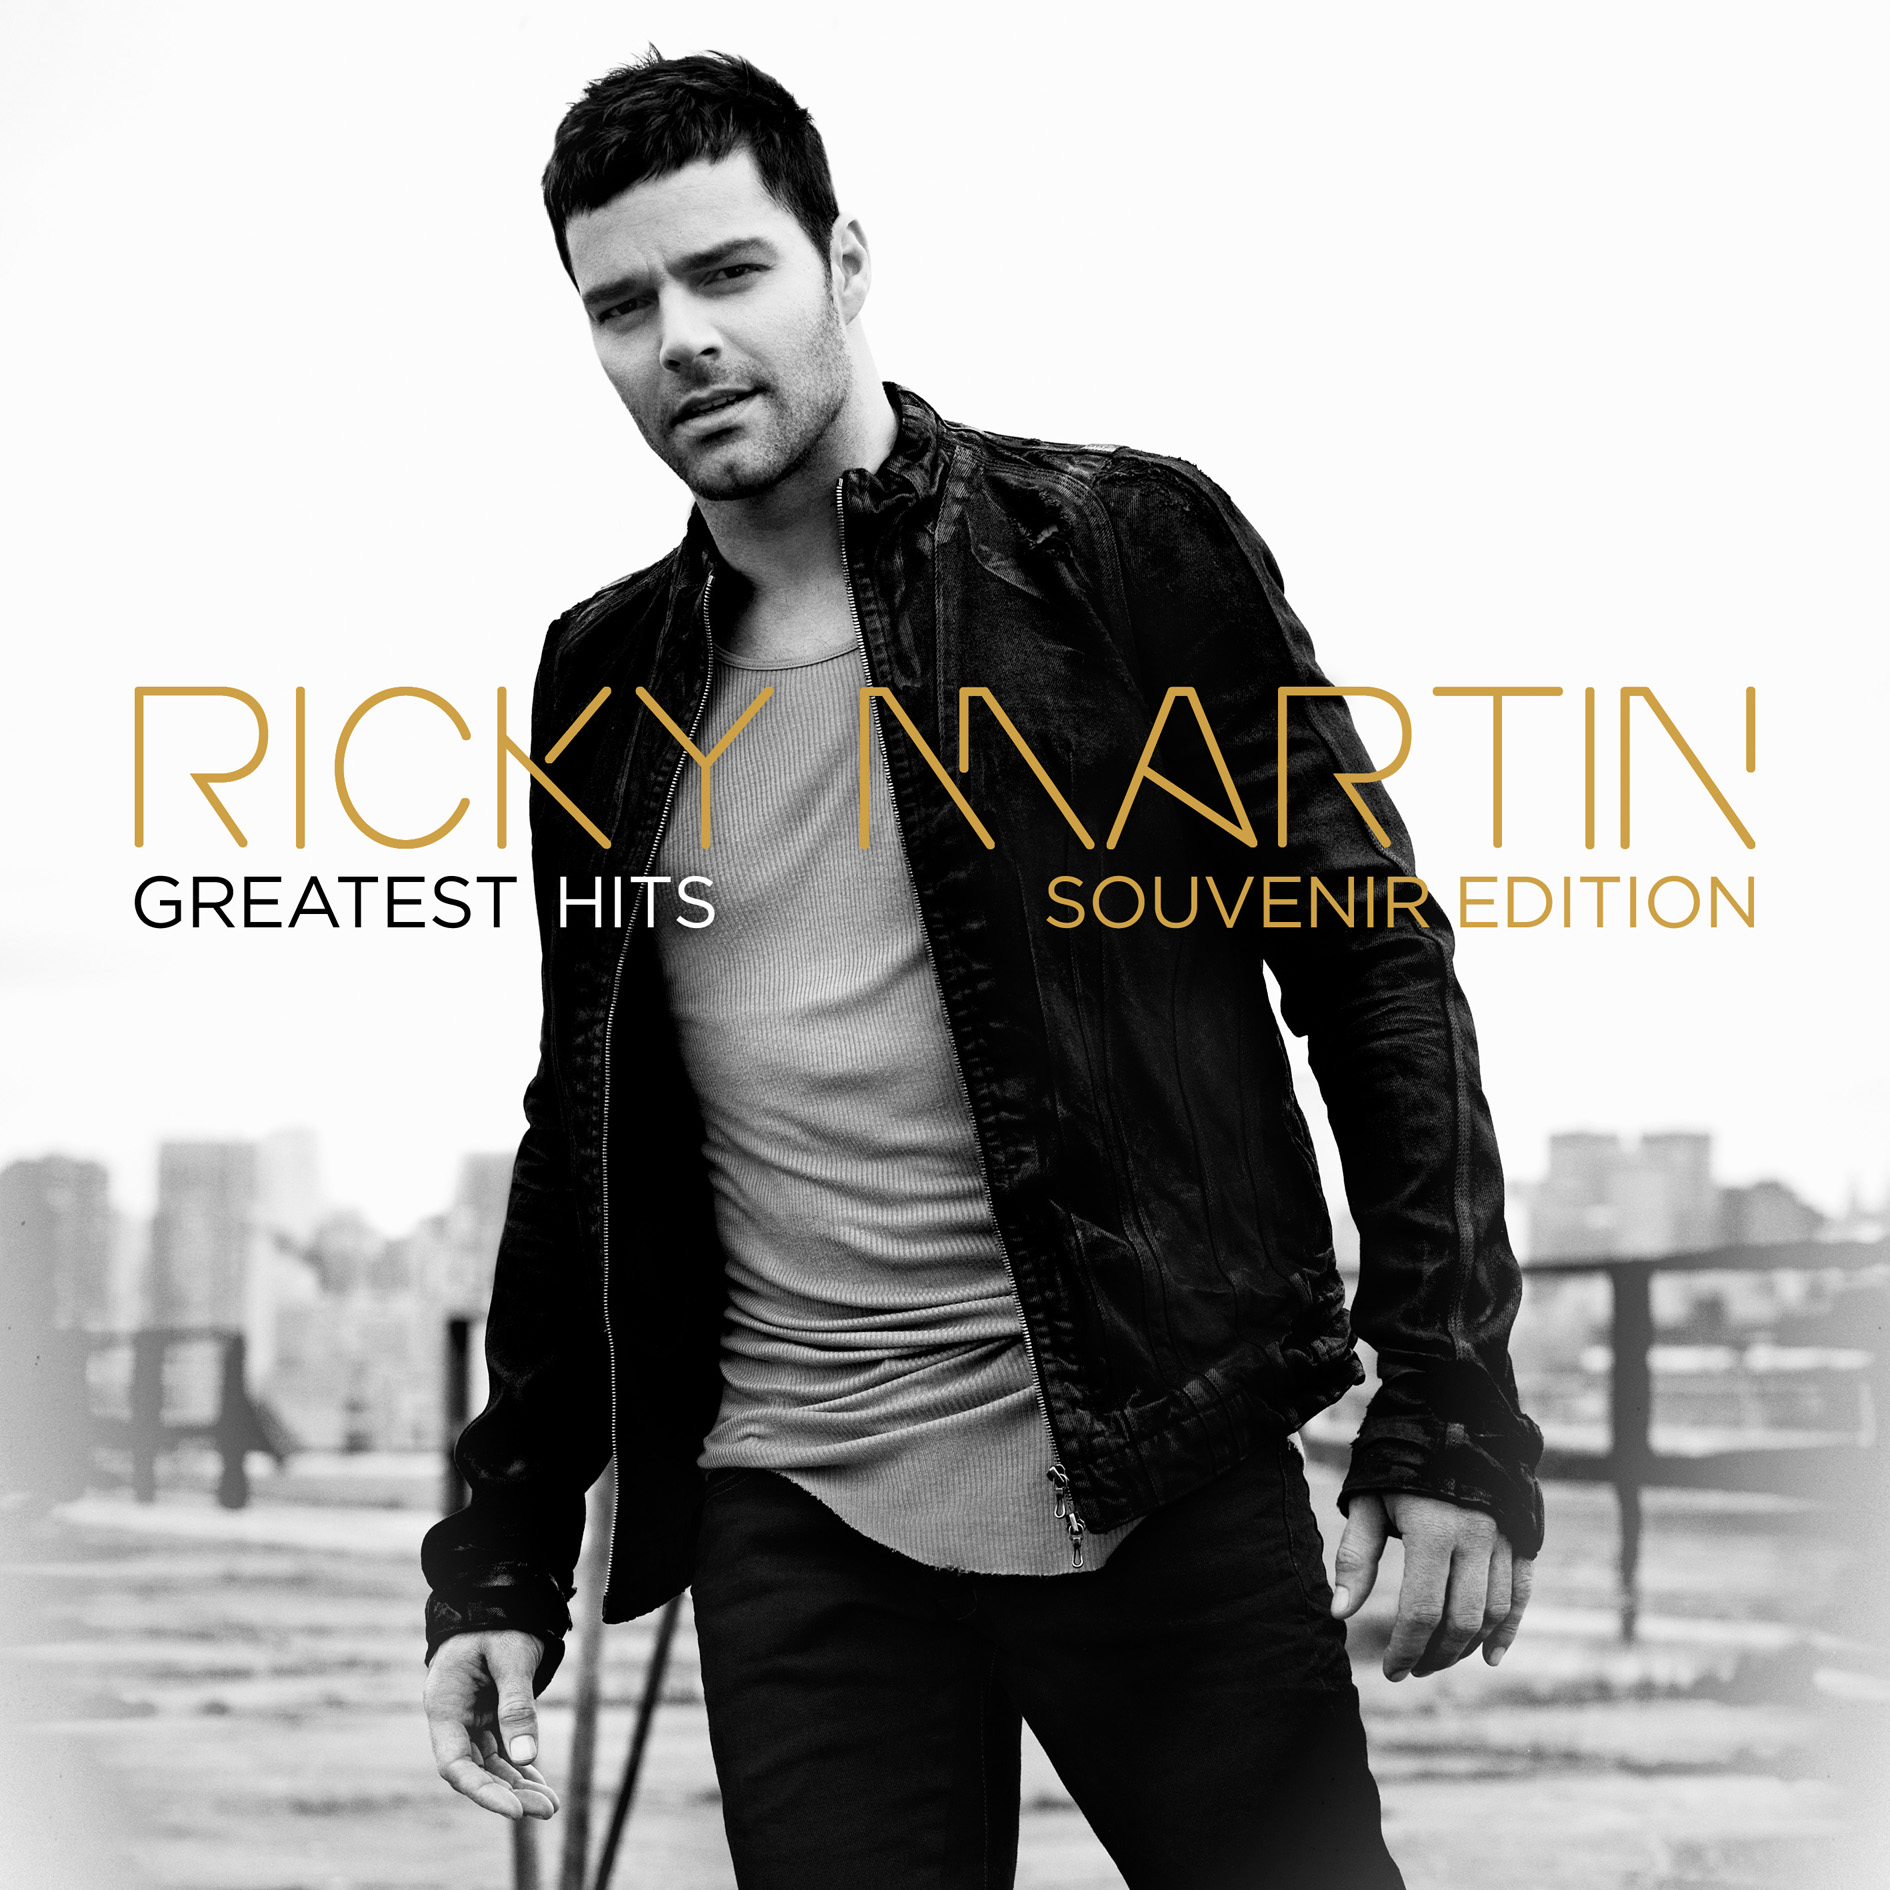 http://1.bp.blogspot.com/-ESVKmc2U0D4/UU-YEb2z20I/AAAAAAAAsgw/1JFknZlNsBI/s2000/Ricky+Martin+Greatest+Hits+Souvenir+Edition.jpg